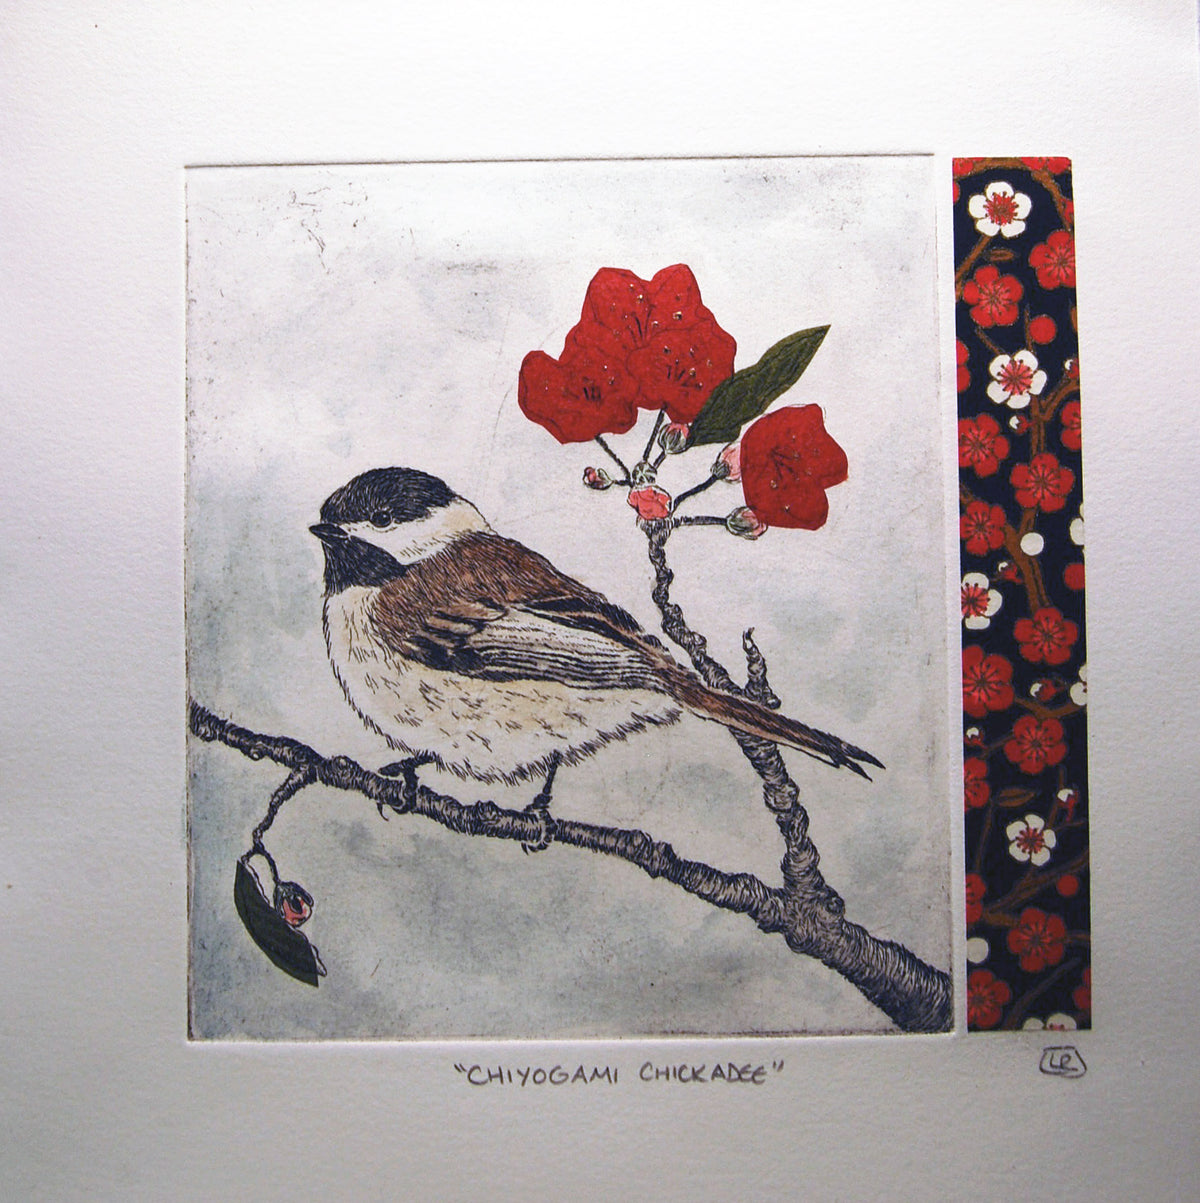 Chiyogami Chickadee - Red Variation